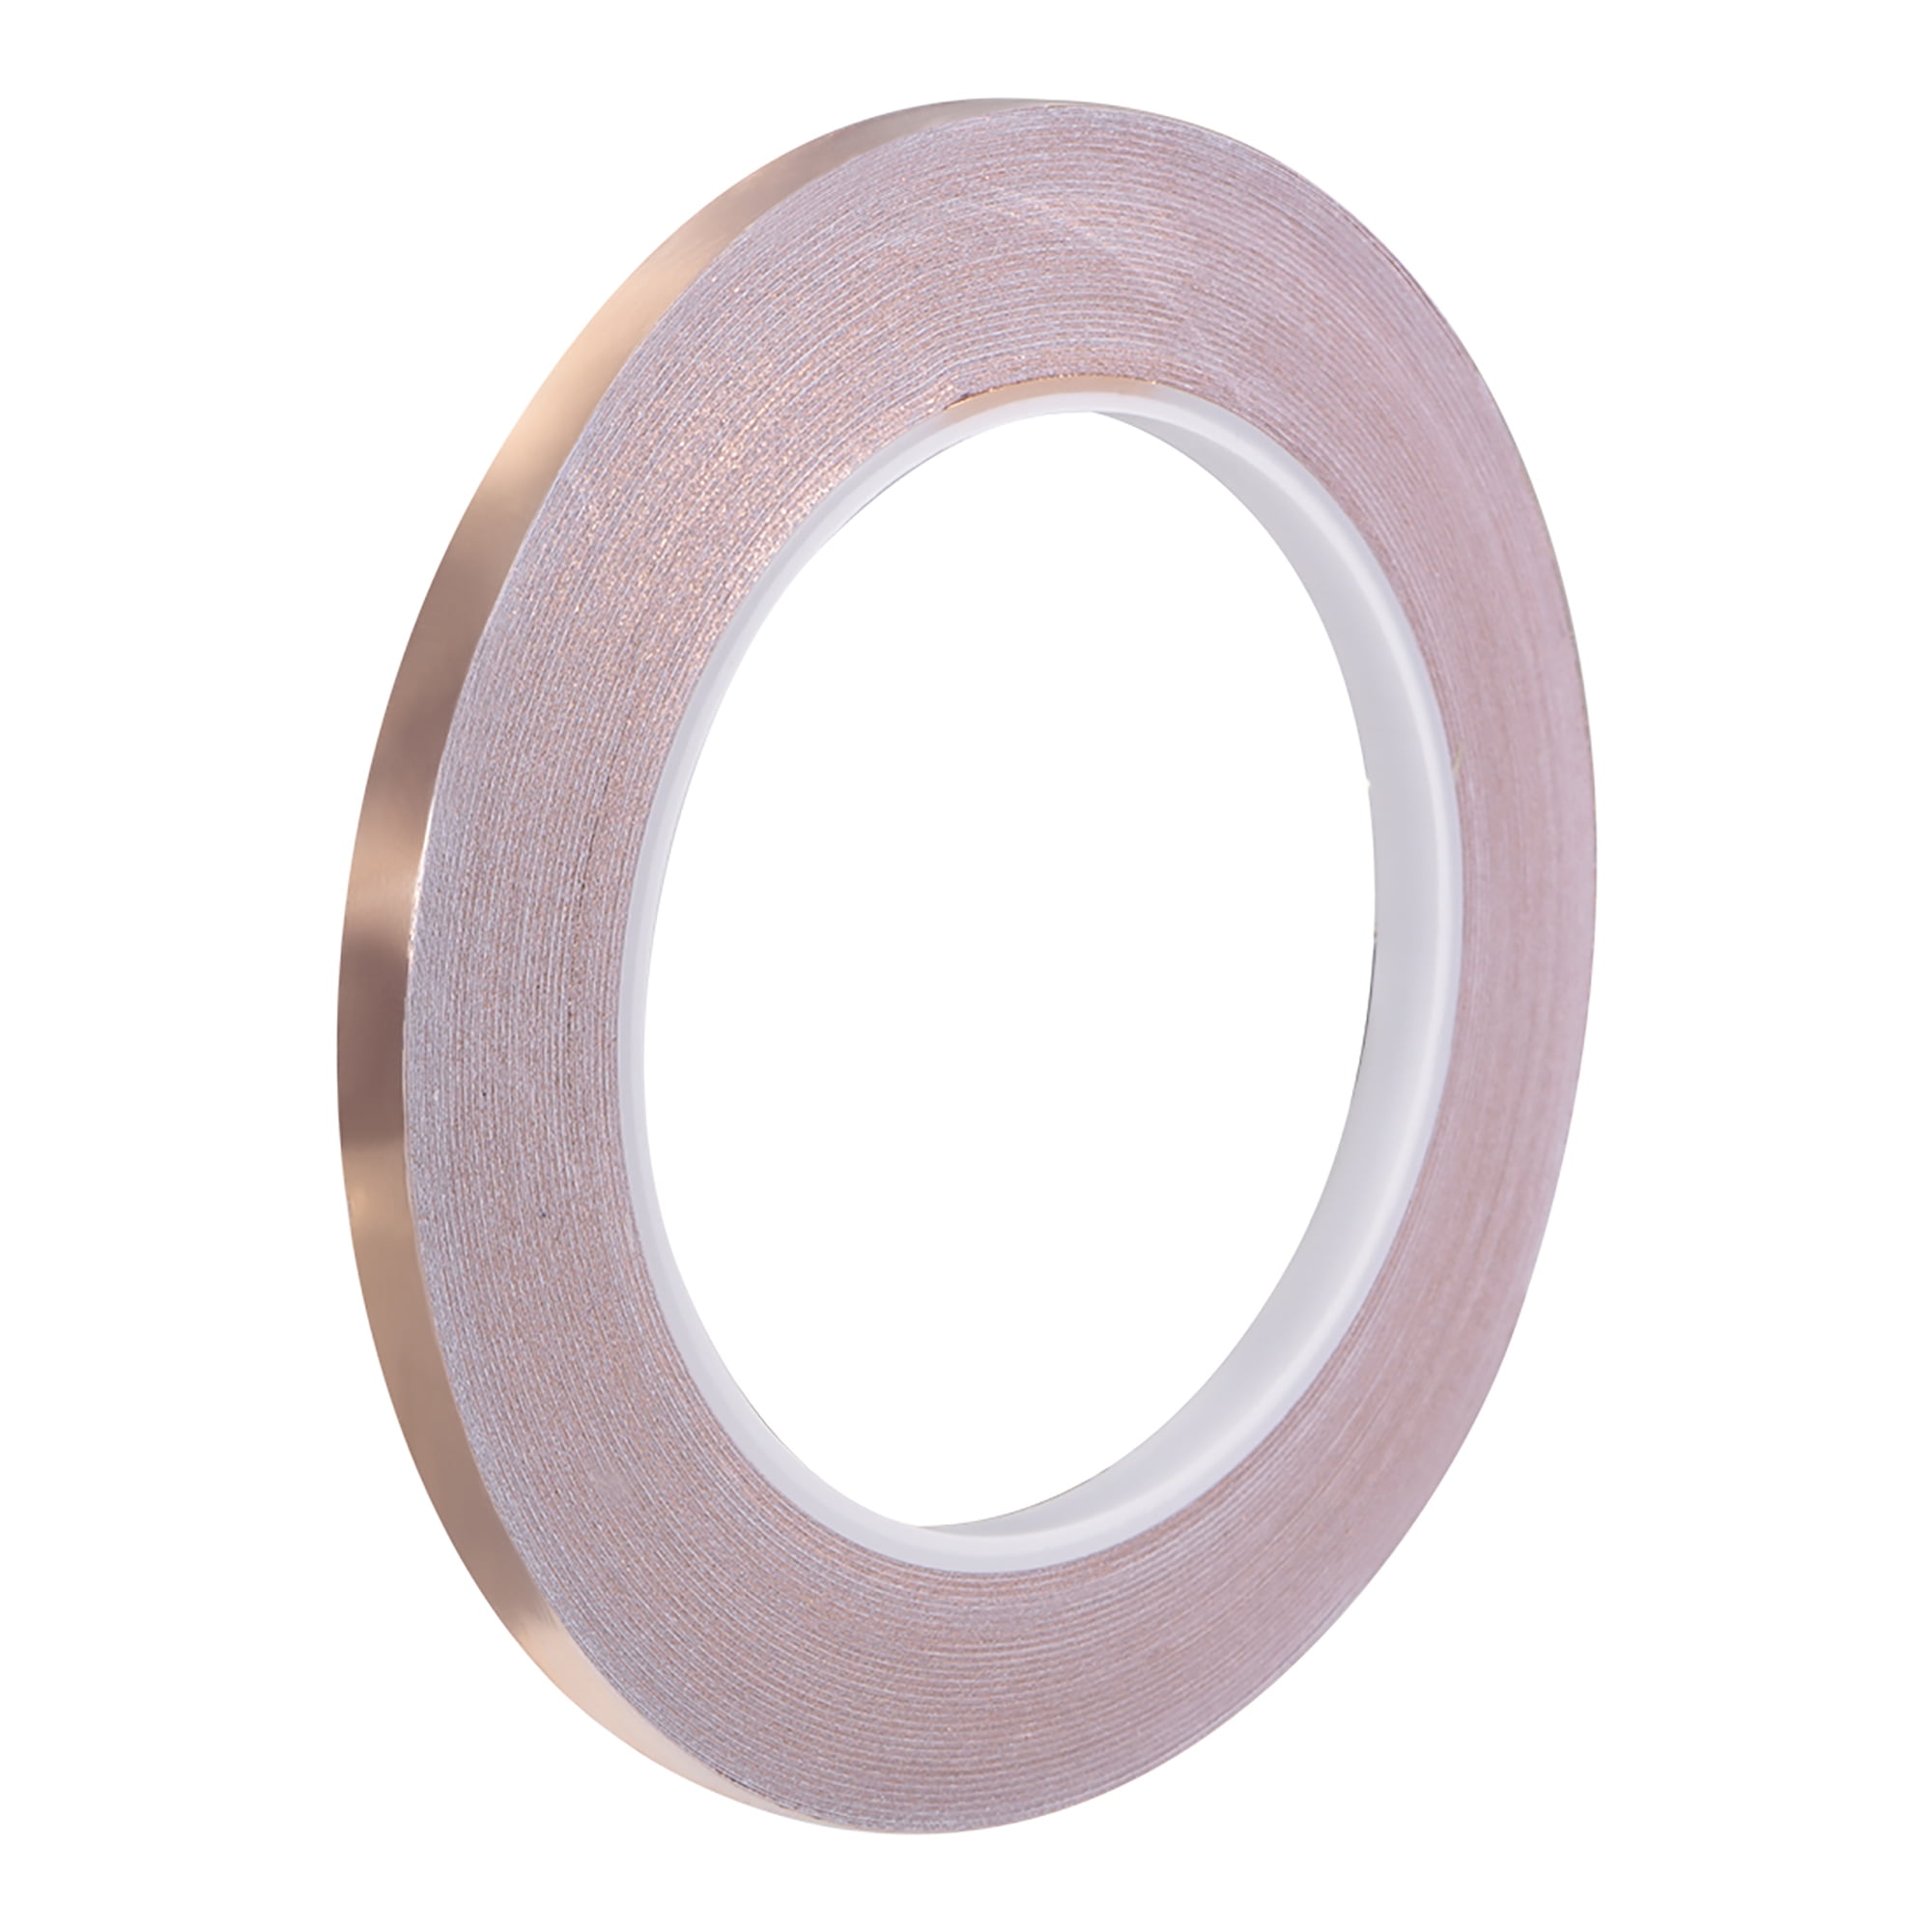 30M length Conductive Copper Foil Tape self adhesive EMI Shielding UK Stock 